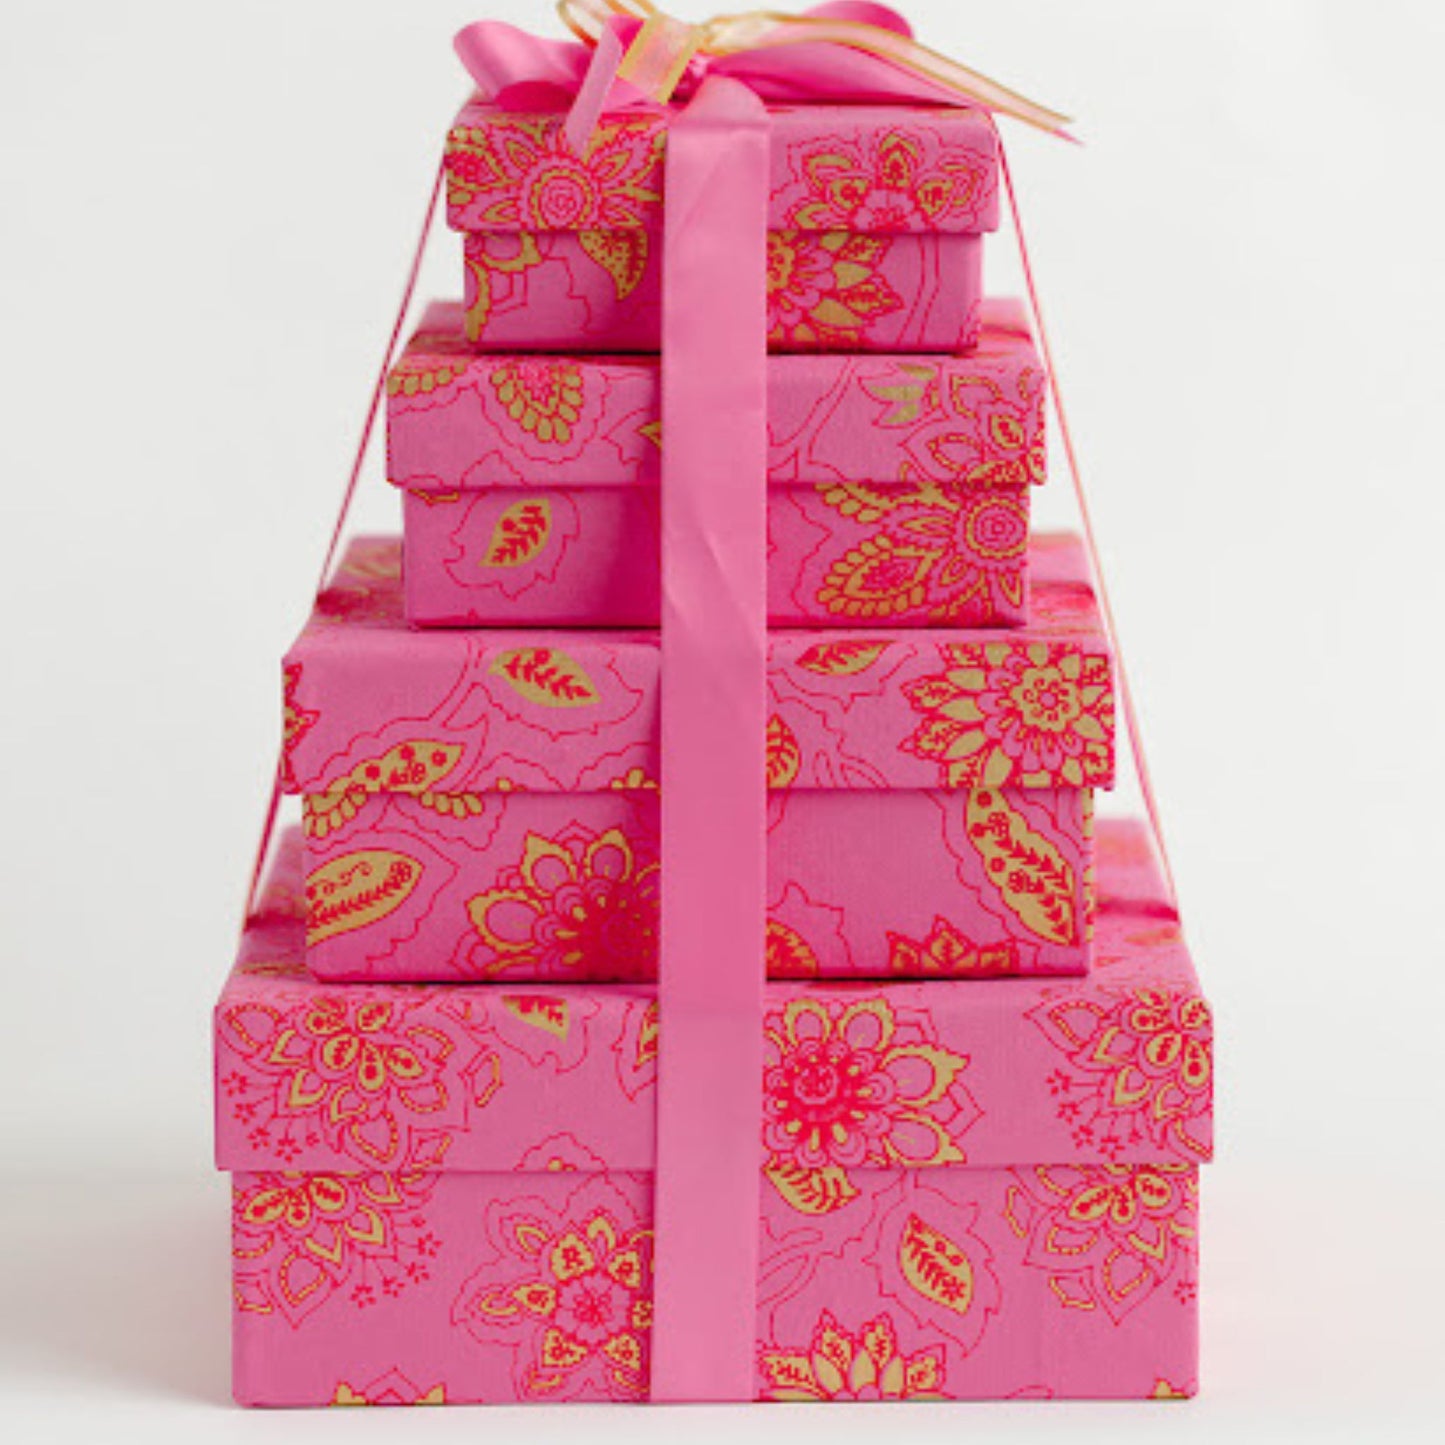 Hot Pink Dahlia Square Gift Box Nest Set